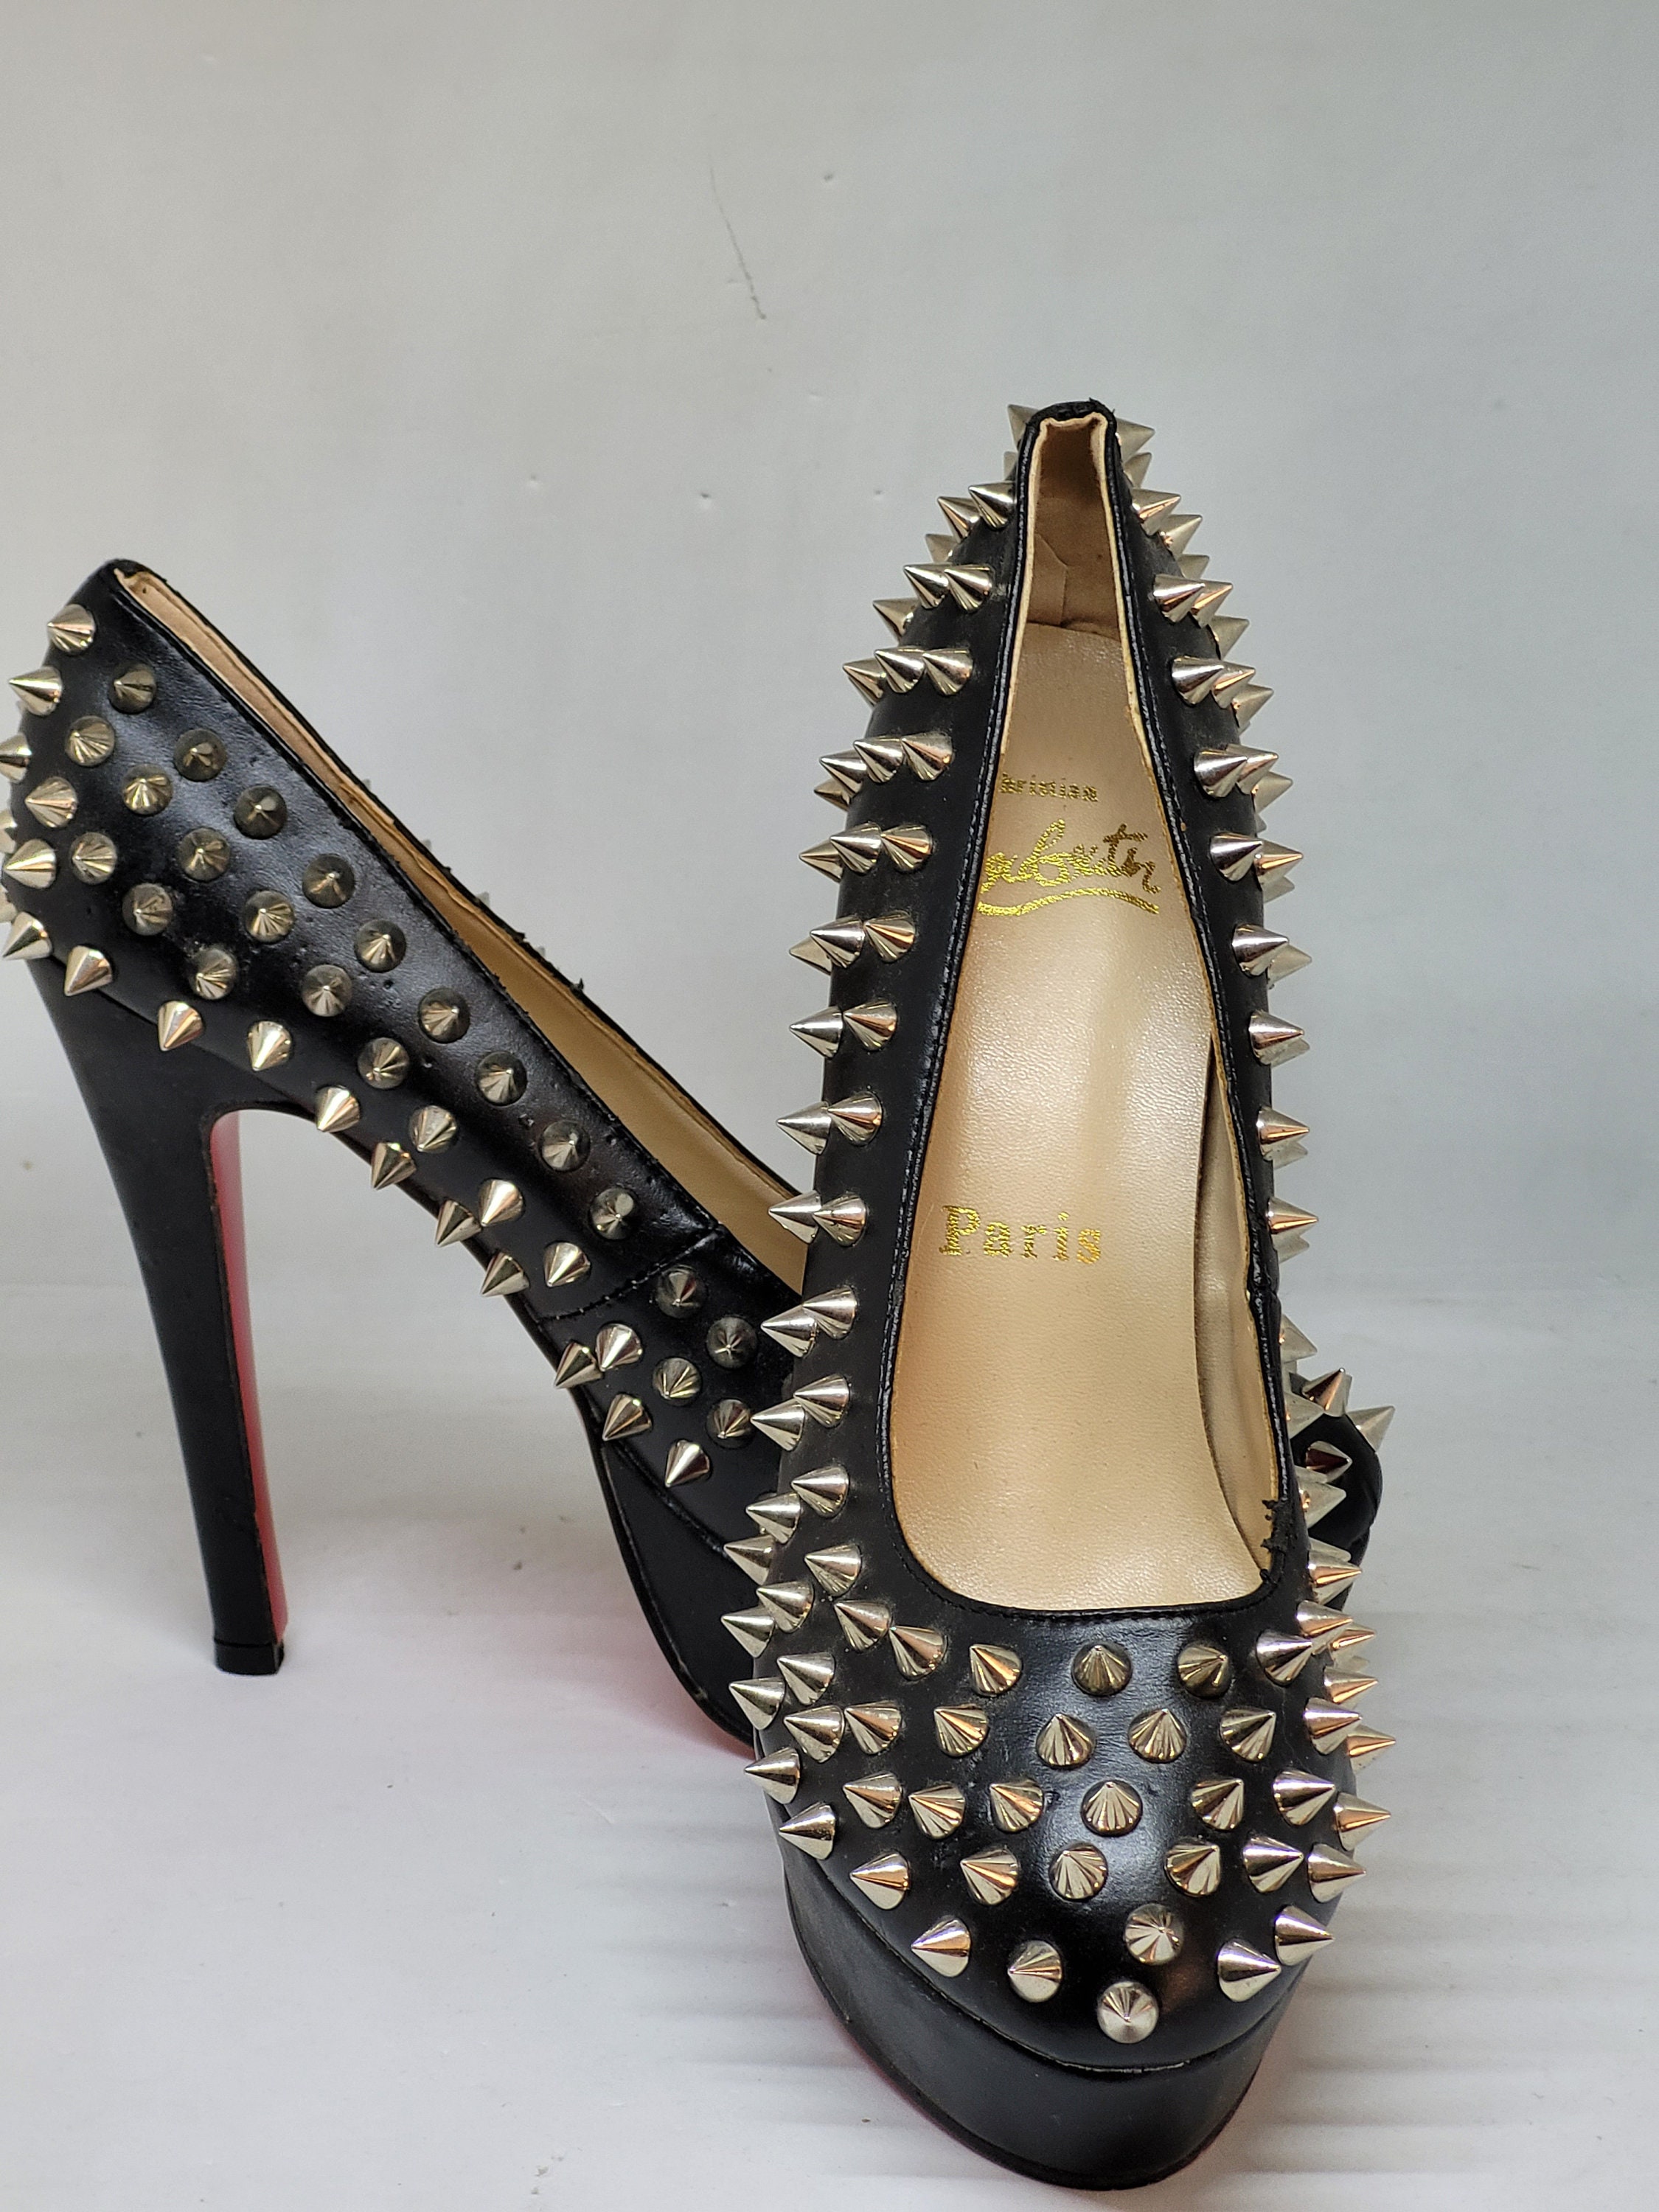 Black High Heel Shoes Spikes Studs Stock Photo 405541129 | Shutterstock